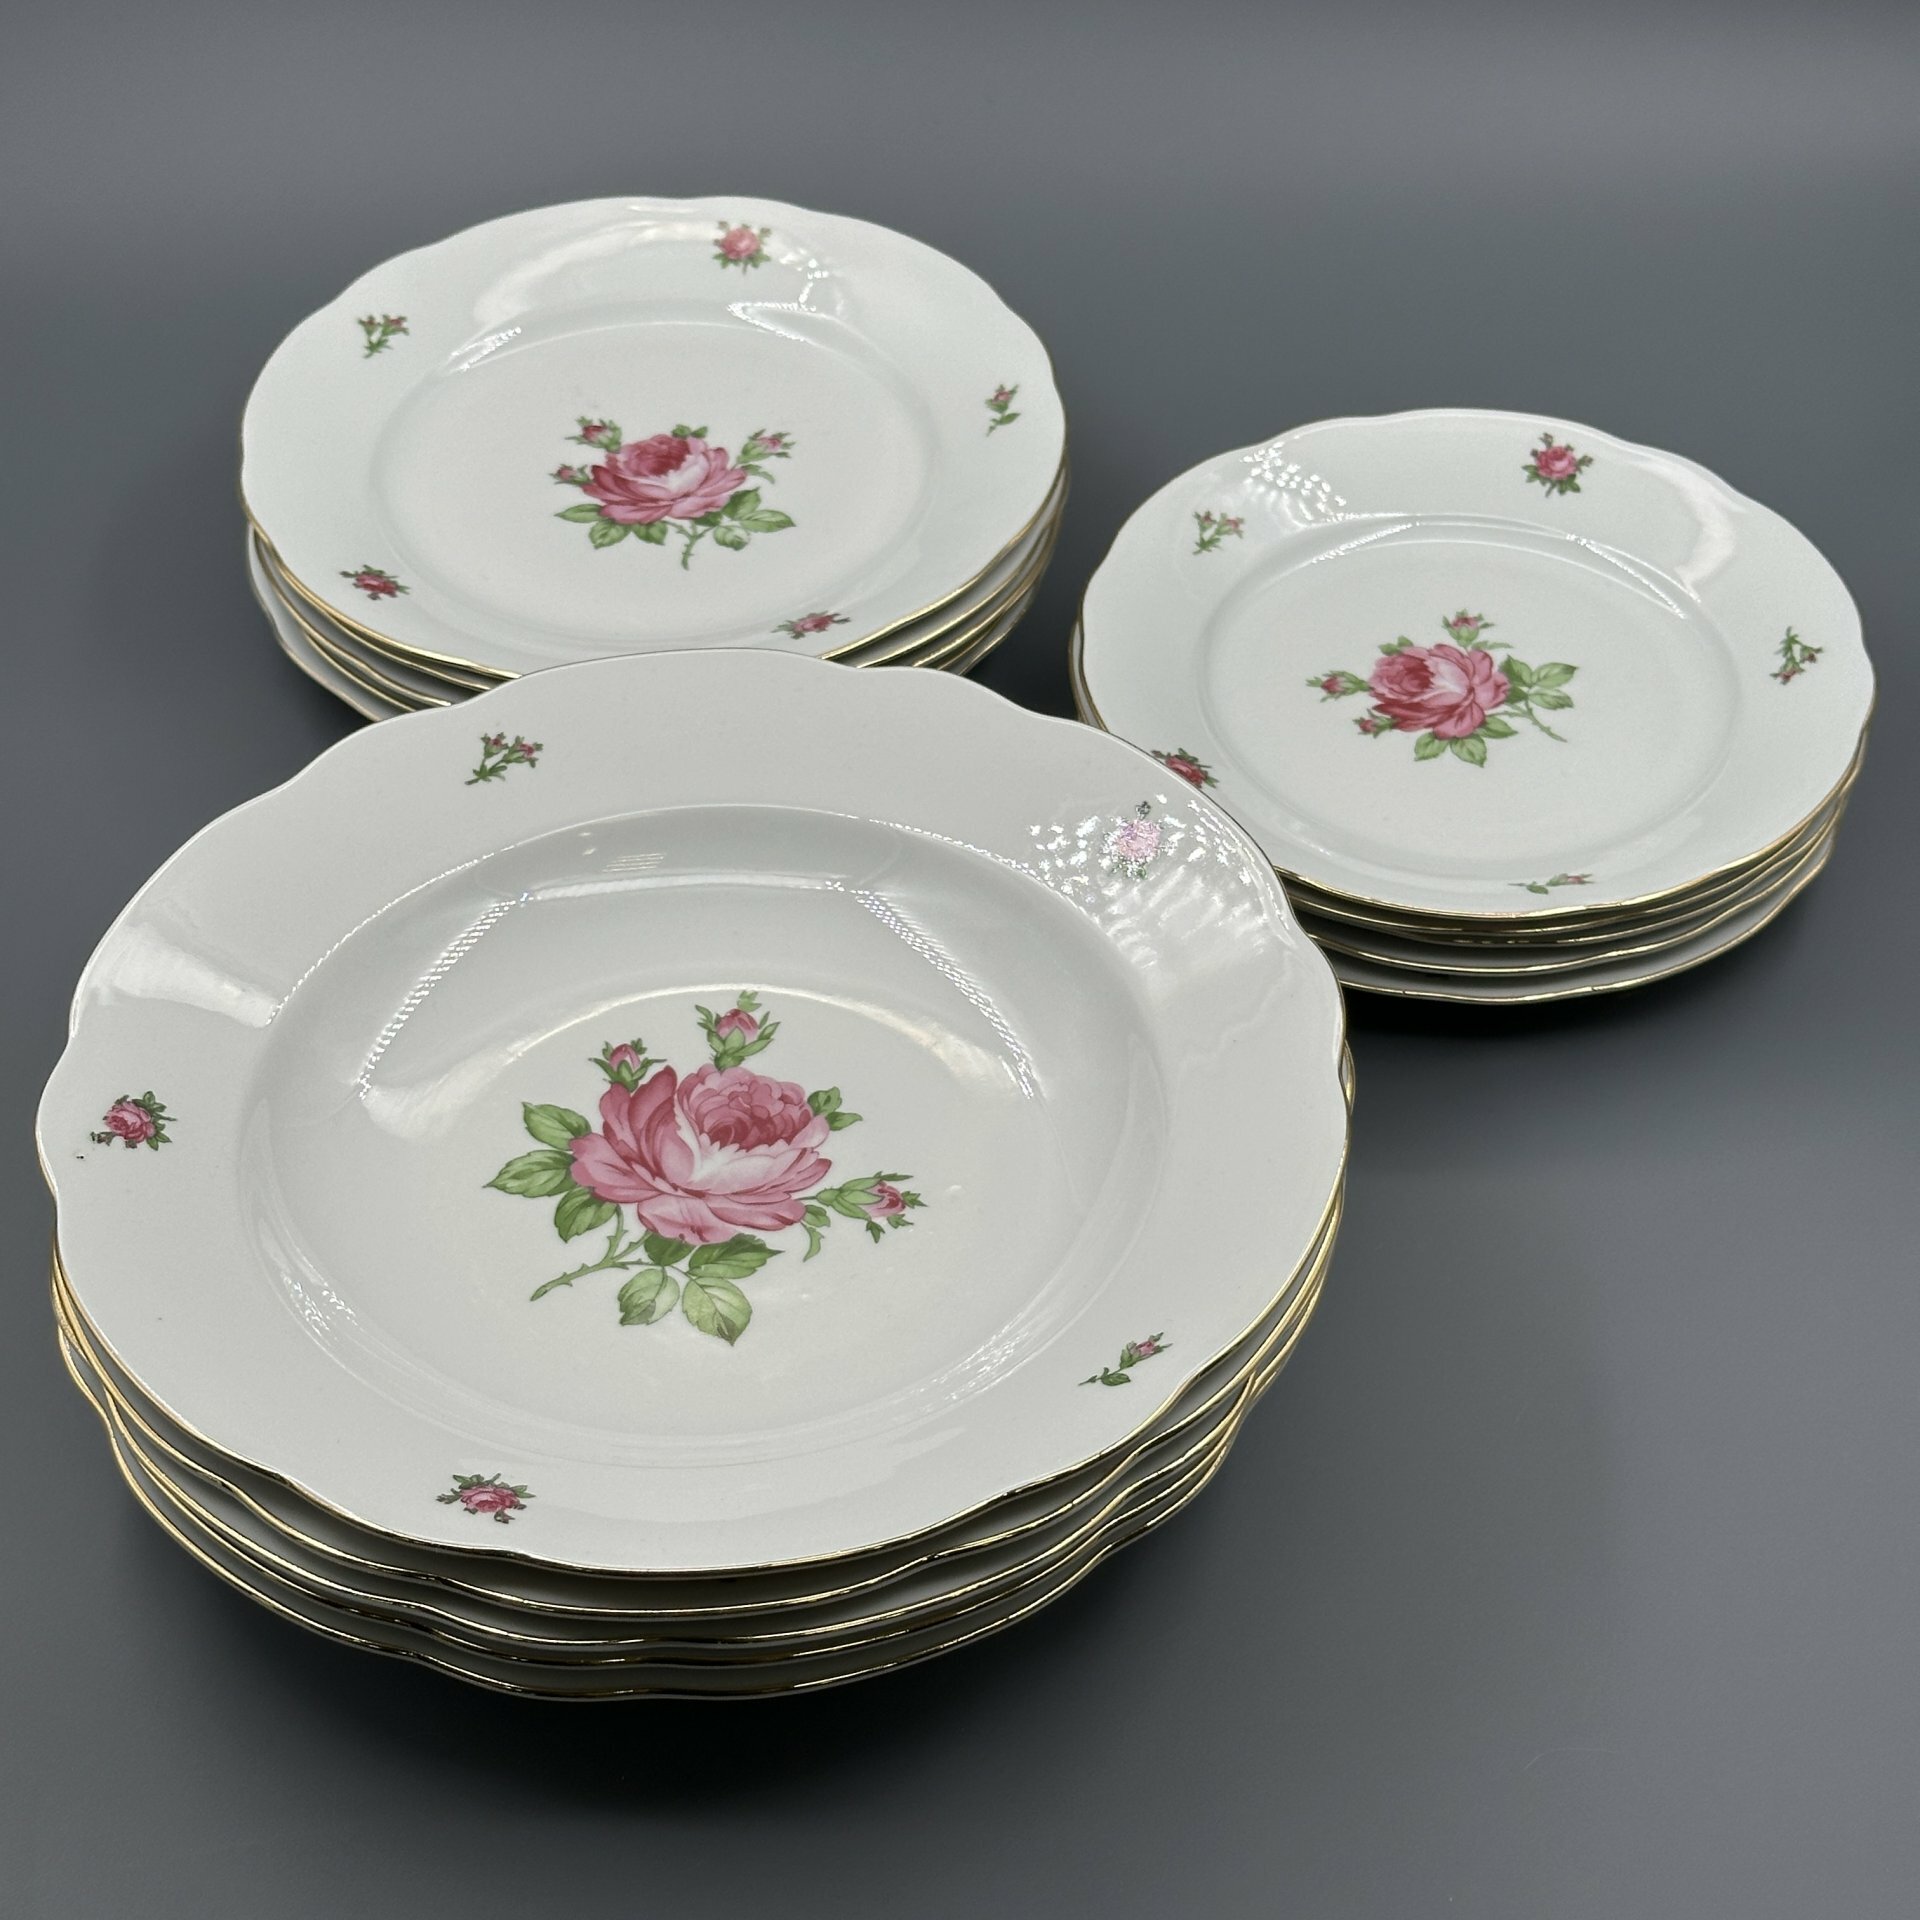 Набор тарелок на 5 персон с изображением роз (15 предметов), фарфор, деколь